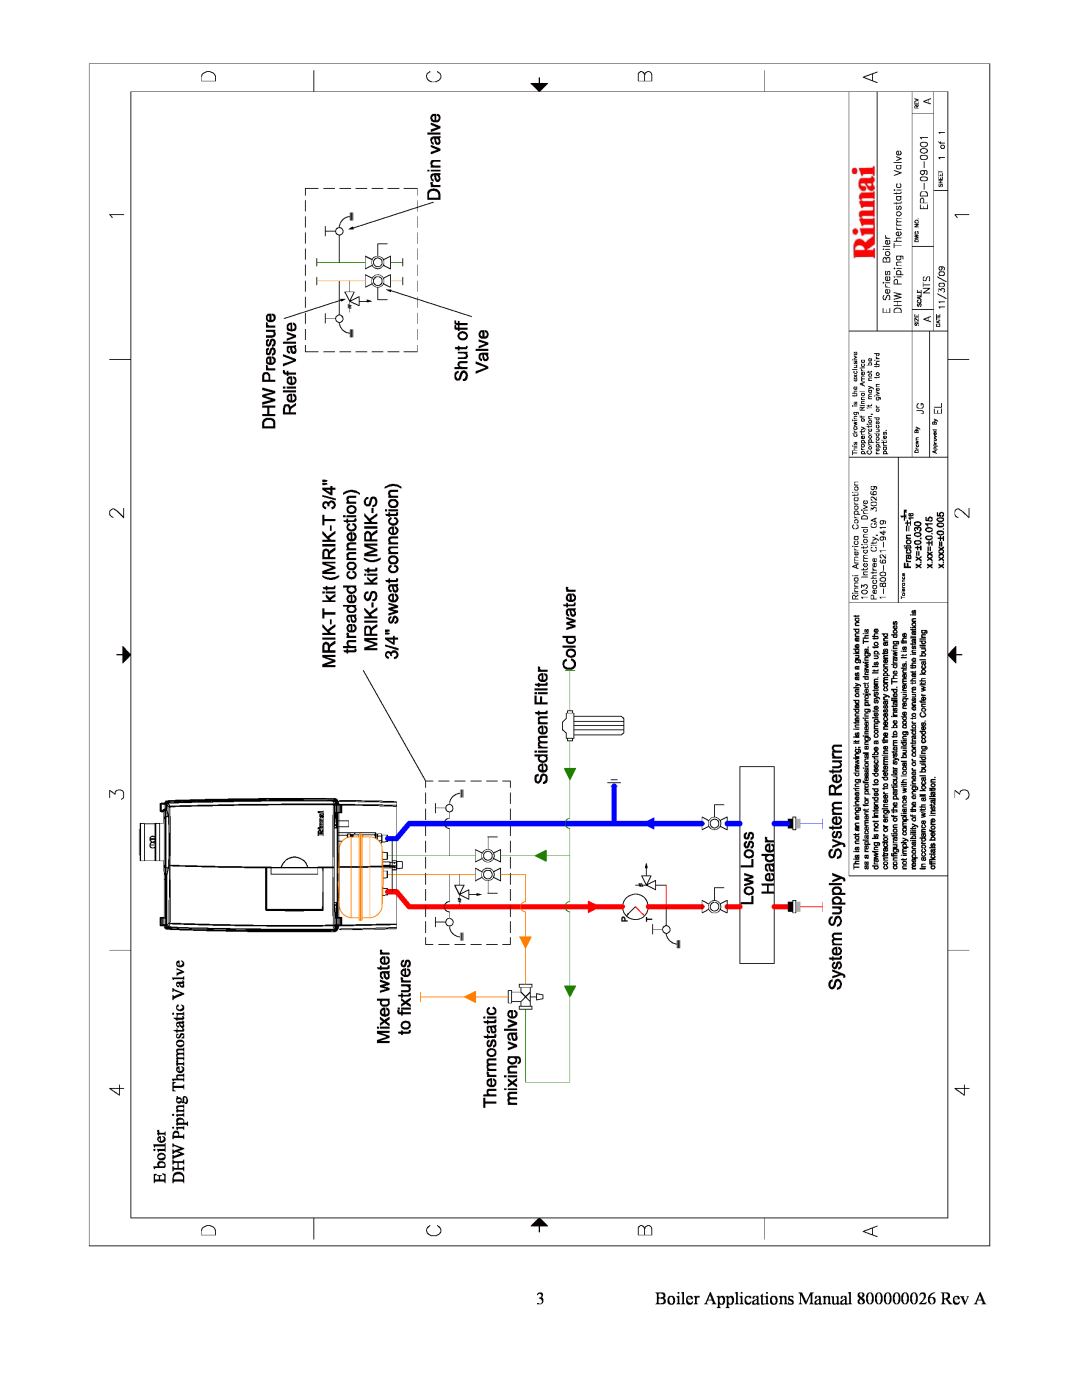 Rinnai EPA-09-0001, QPD-09-0001, EPD-09-0001 manual Boiler Applications Manual 800000026 Rev A 